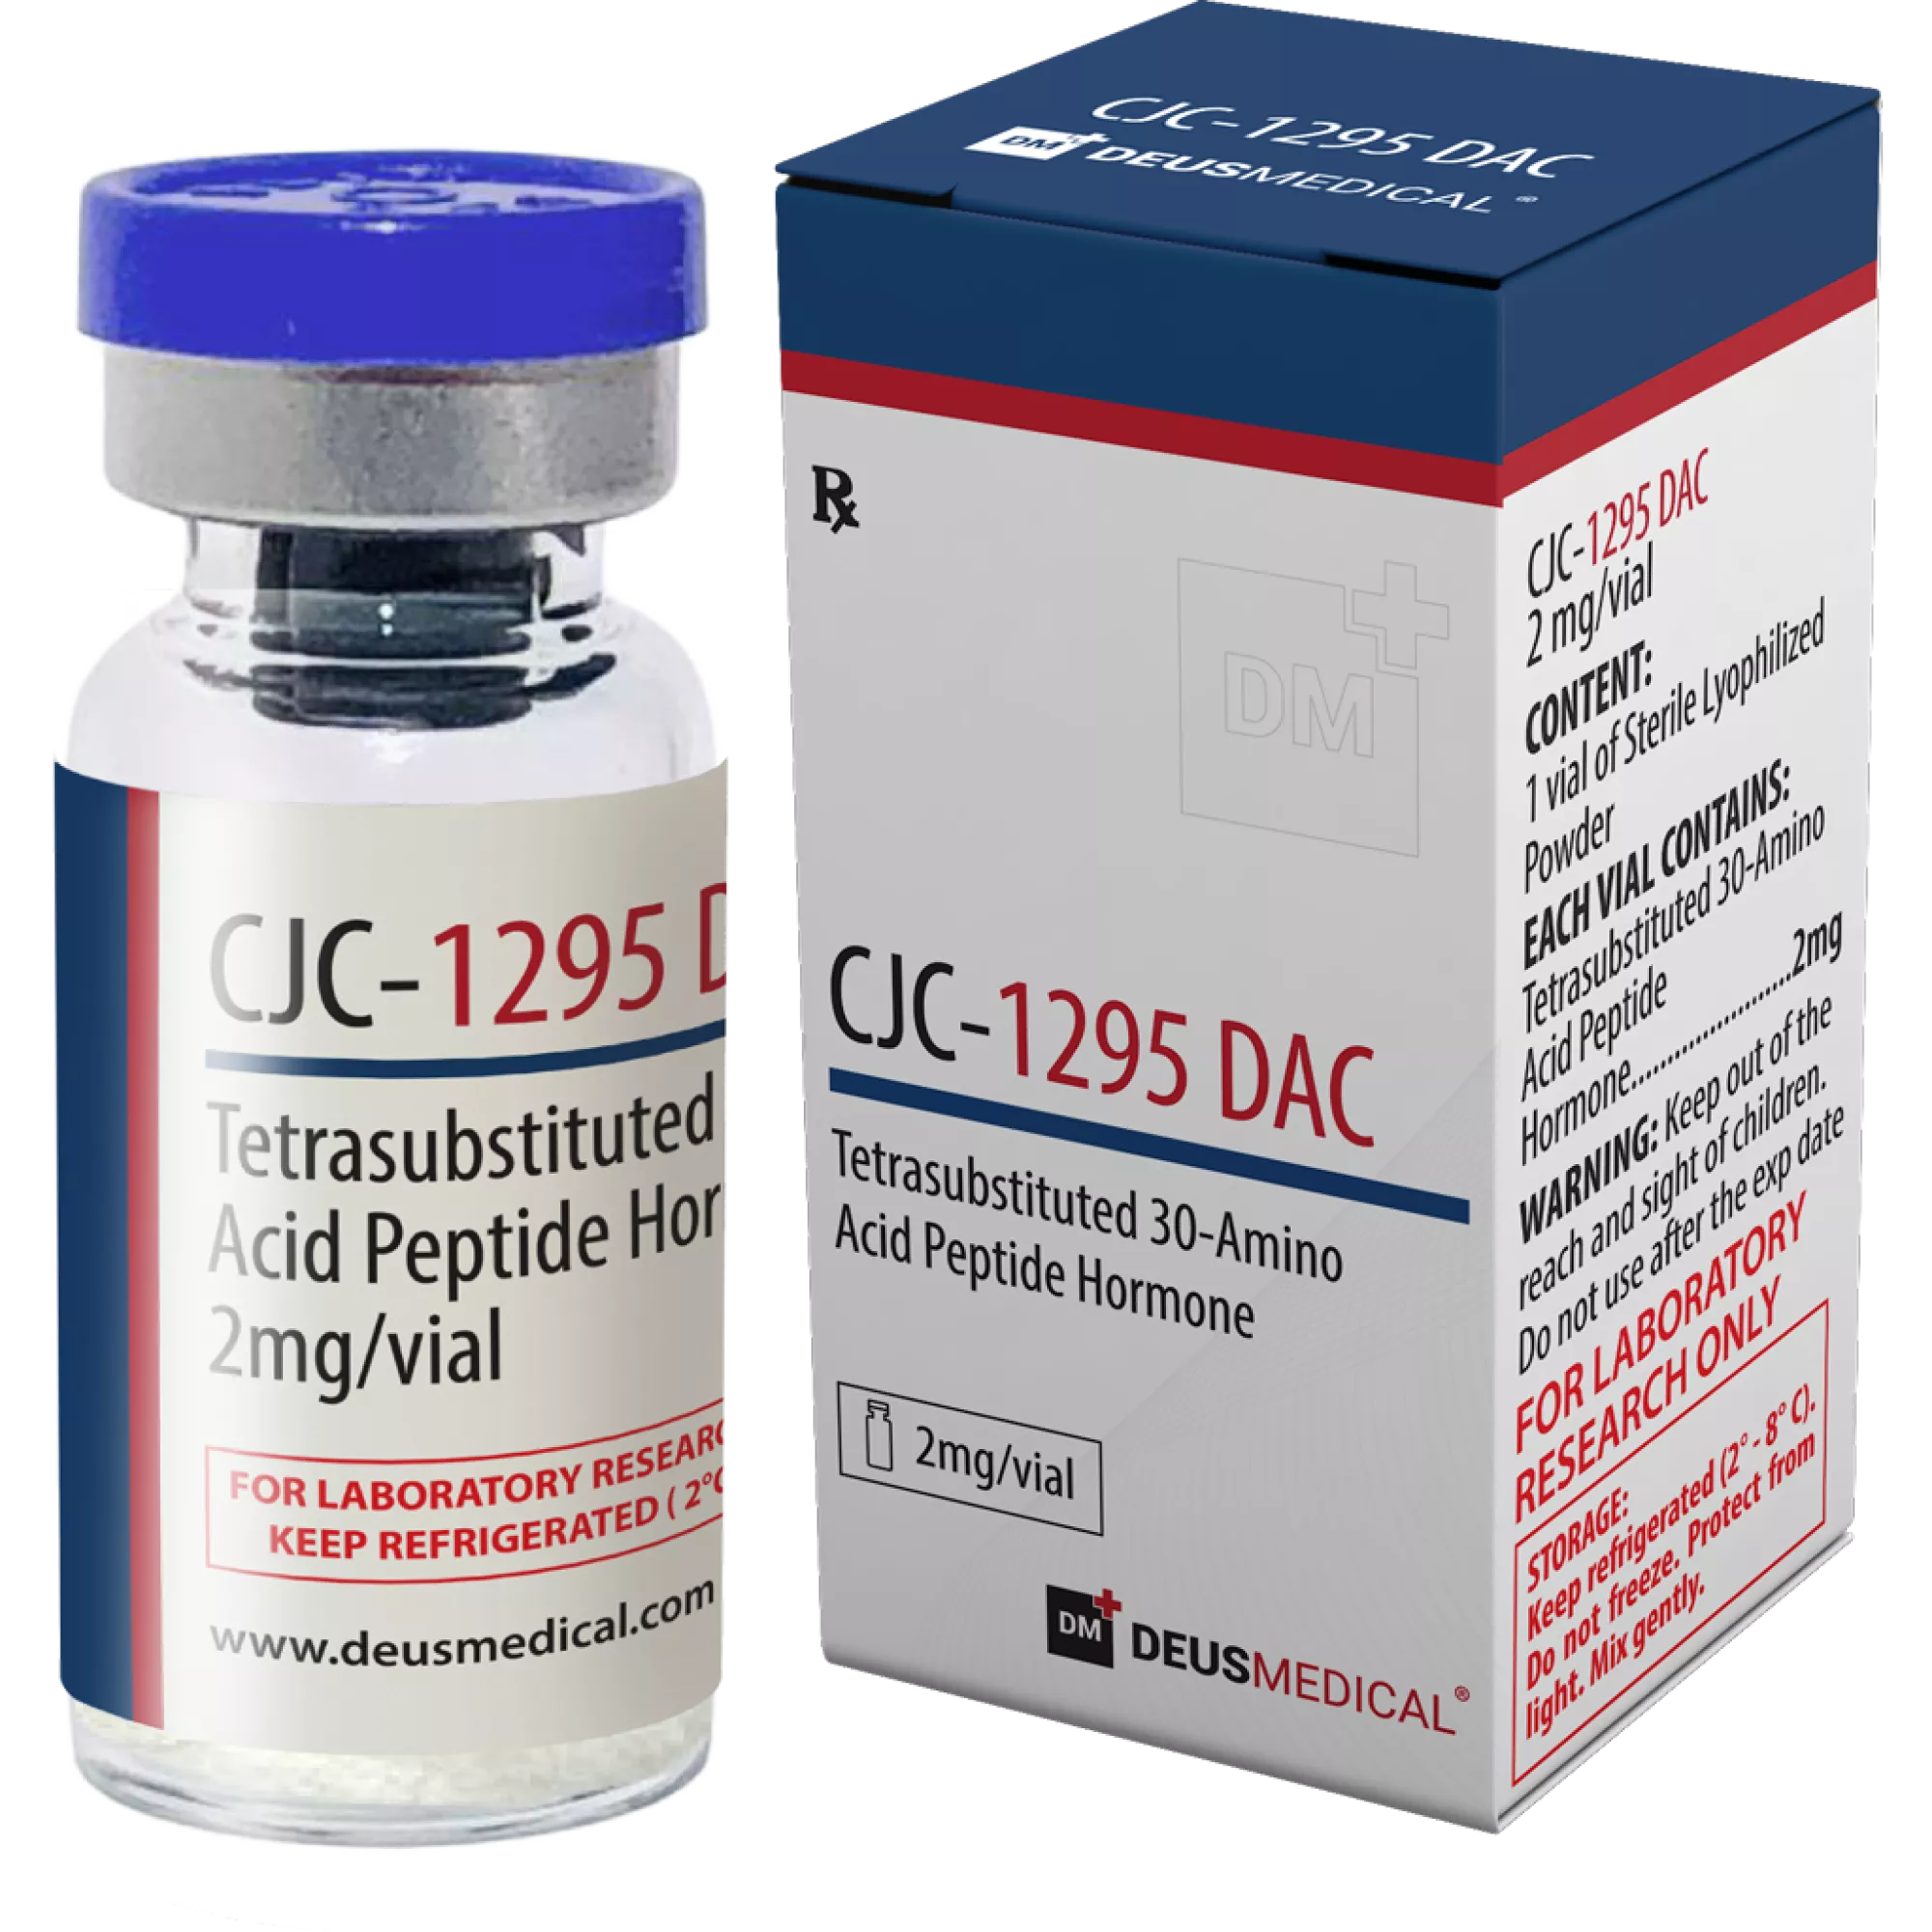 CJC-1295 DAC (Tetrasubstituted 30-Amino Acid Peptide Hormone), Deus Medical, Buy Steroids Online - www.deuspower.shop